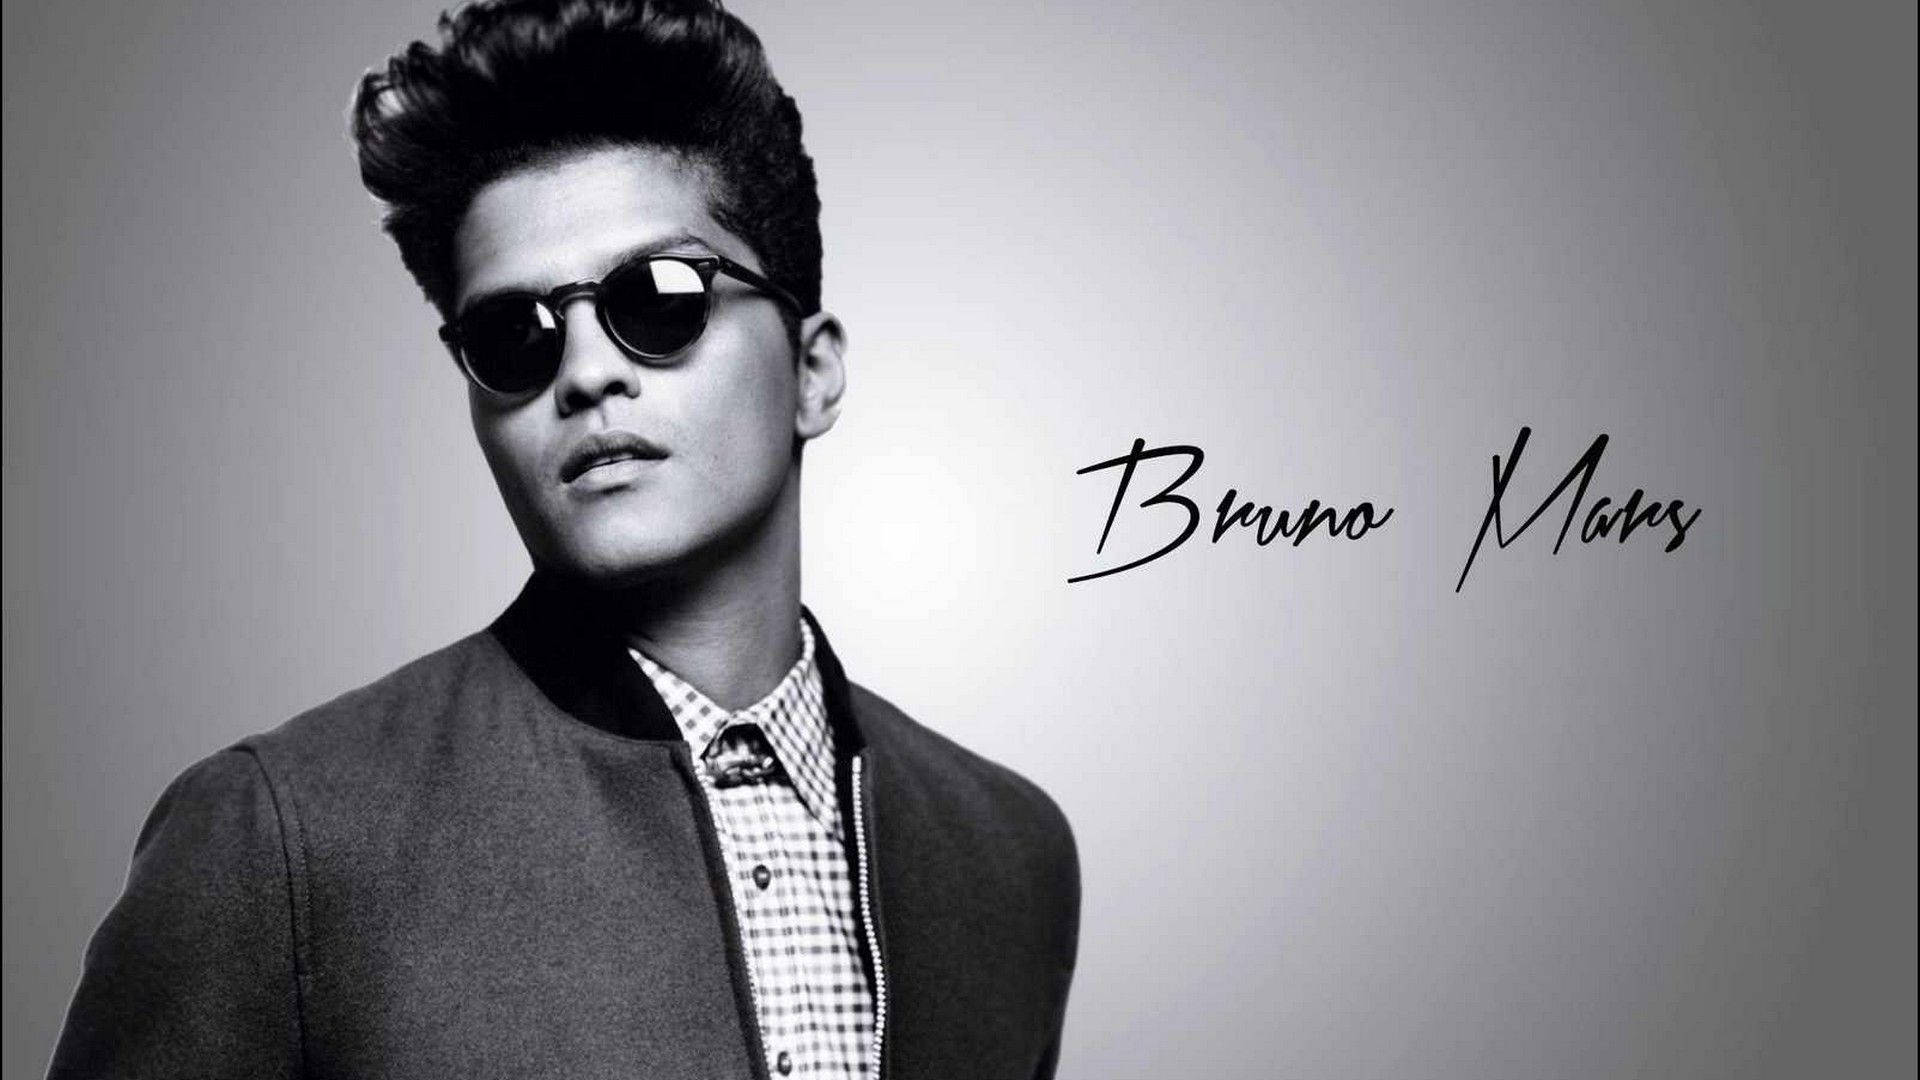 Bruno Mars In Dashing Look